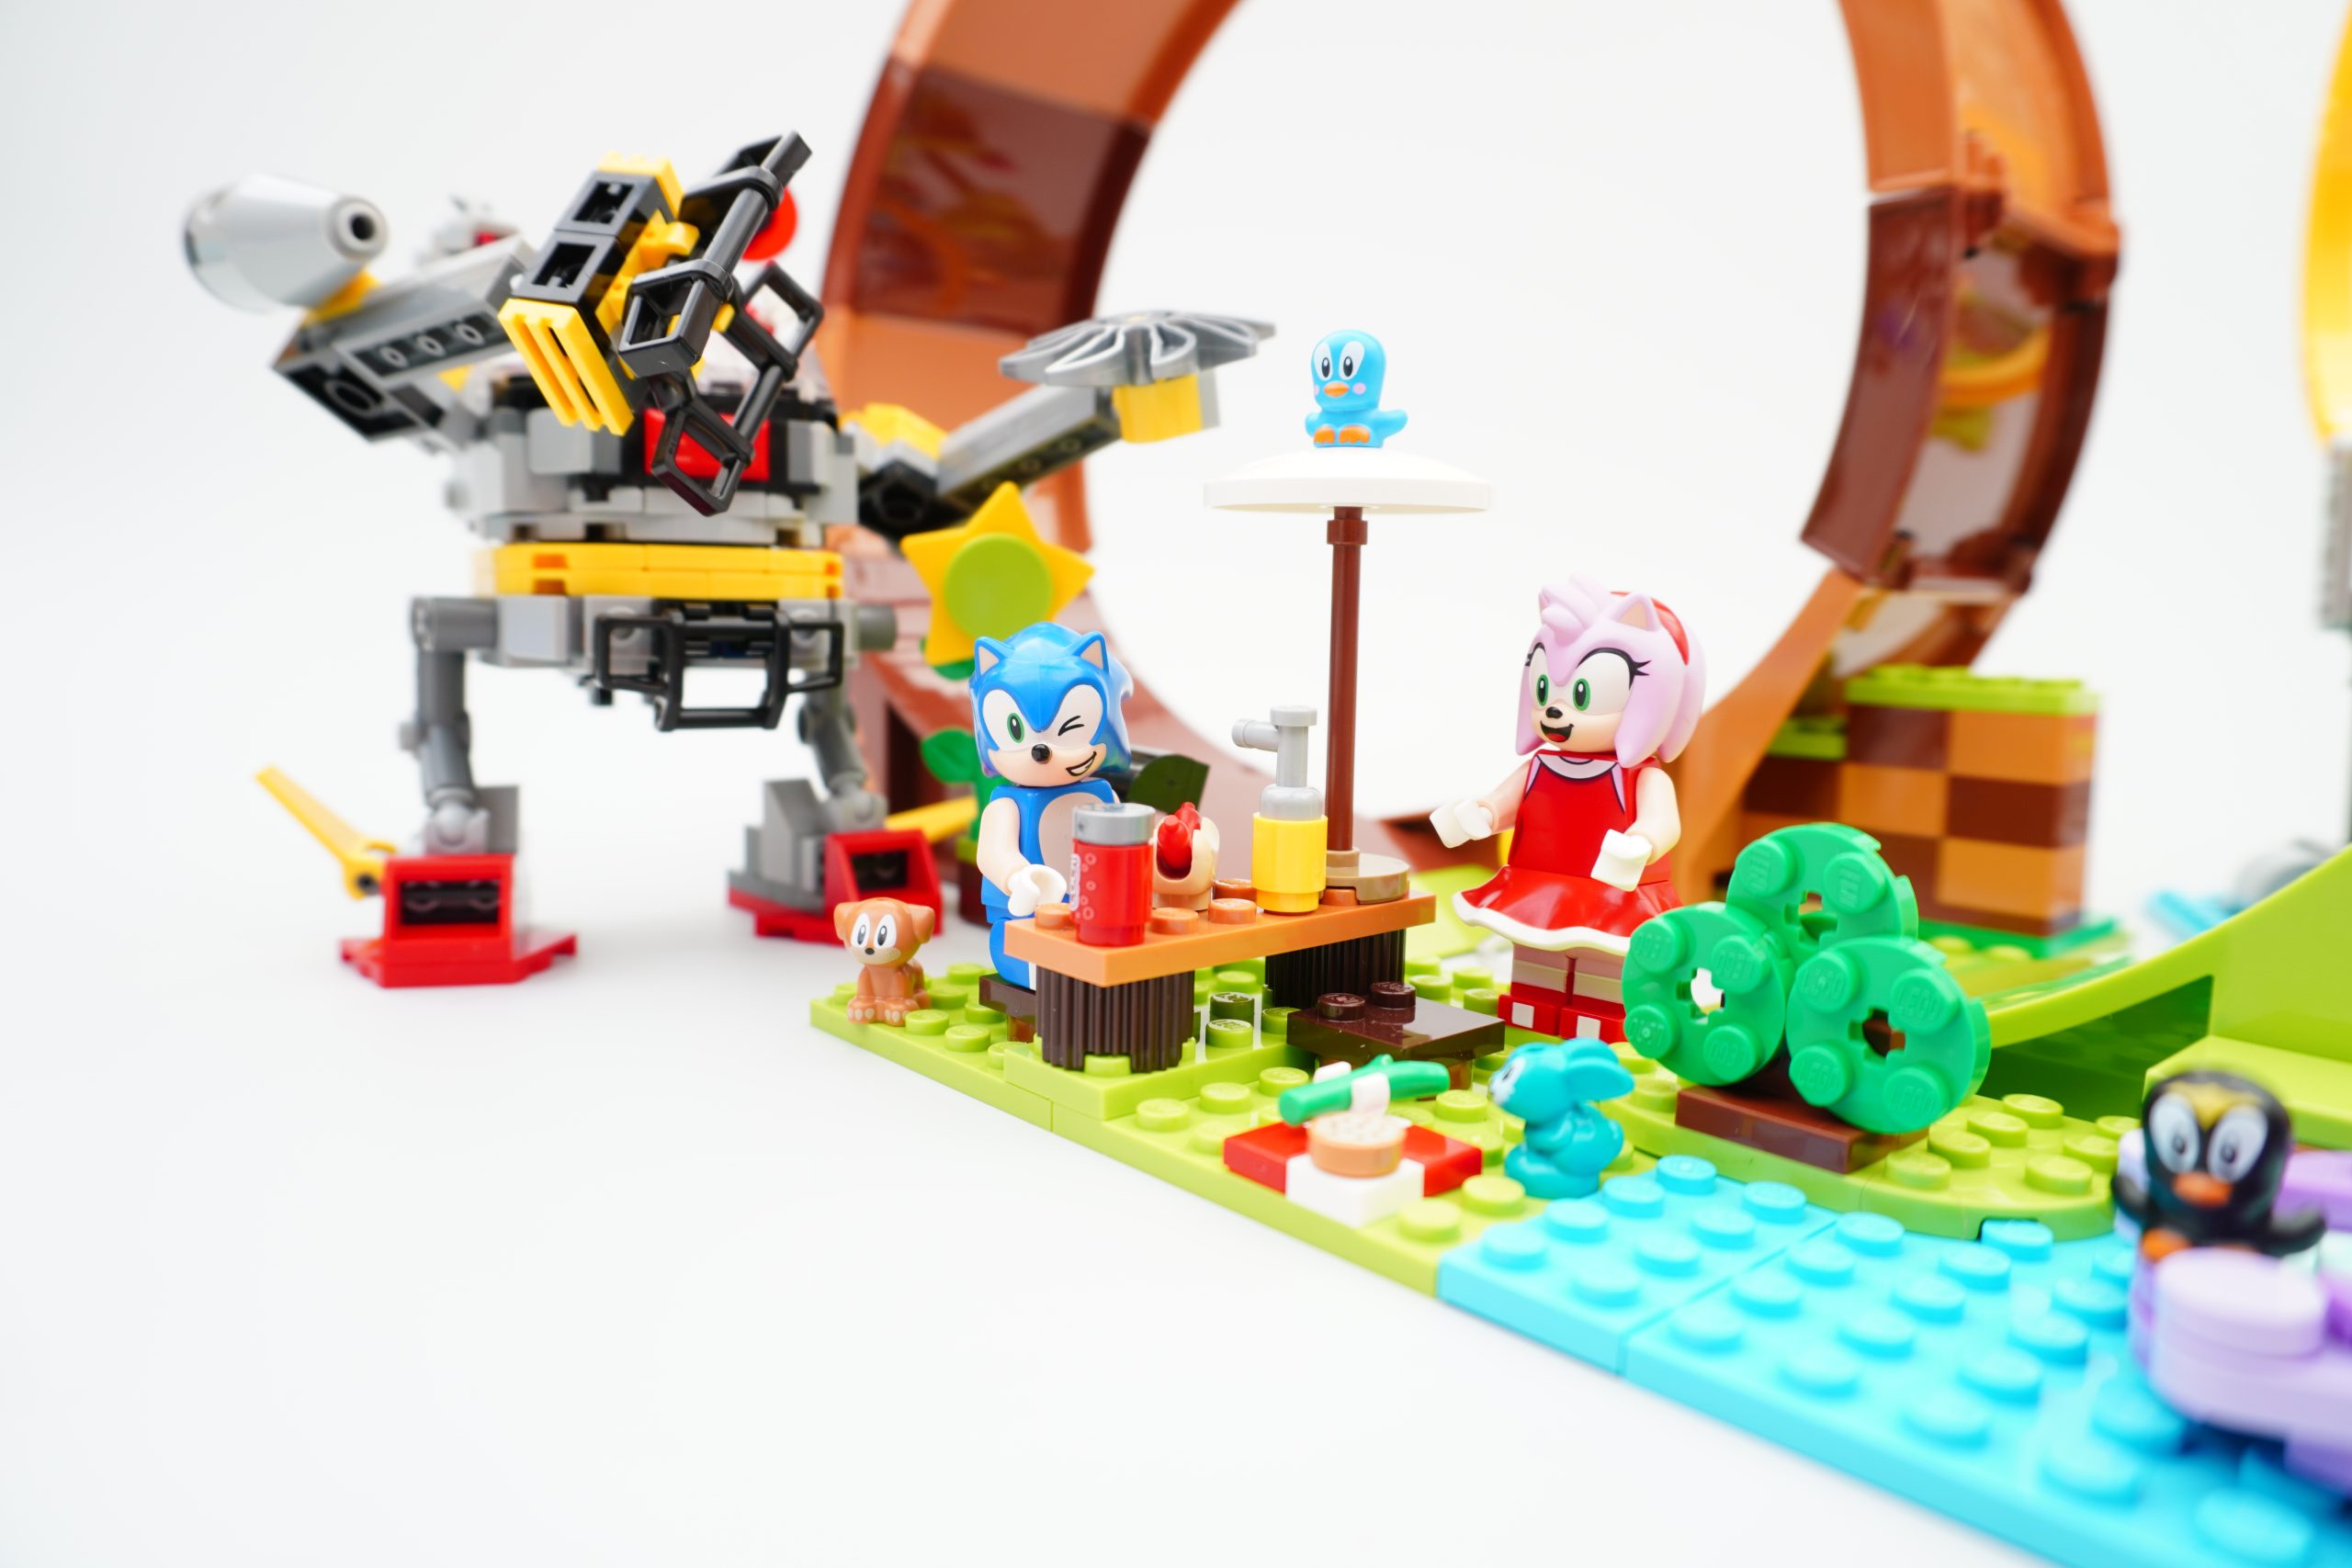 LEGO® Sonic's Green Hill Zone Loop Challenge – 76994 – LEGOLAND